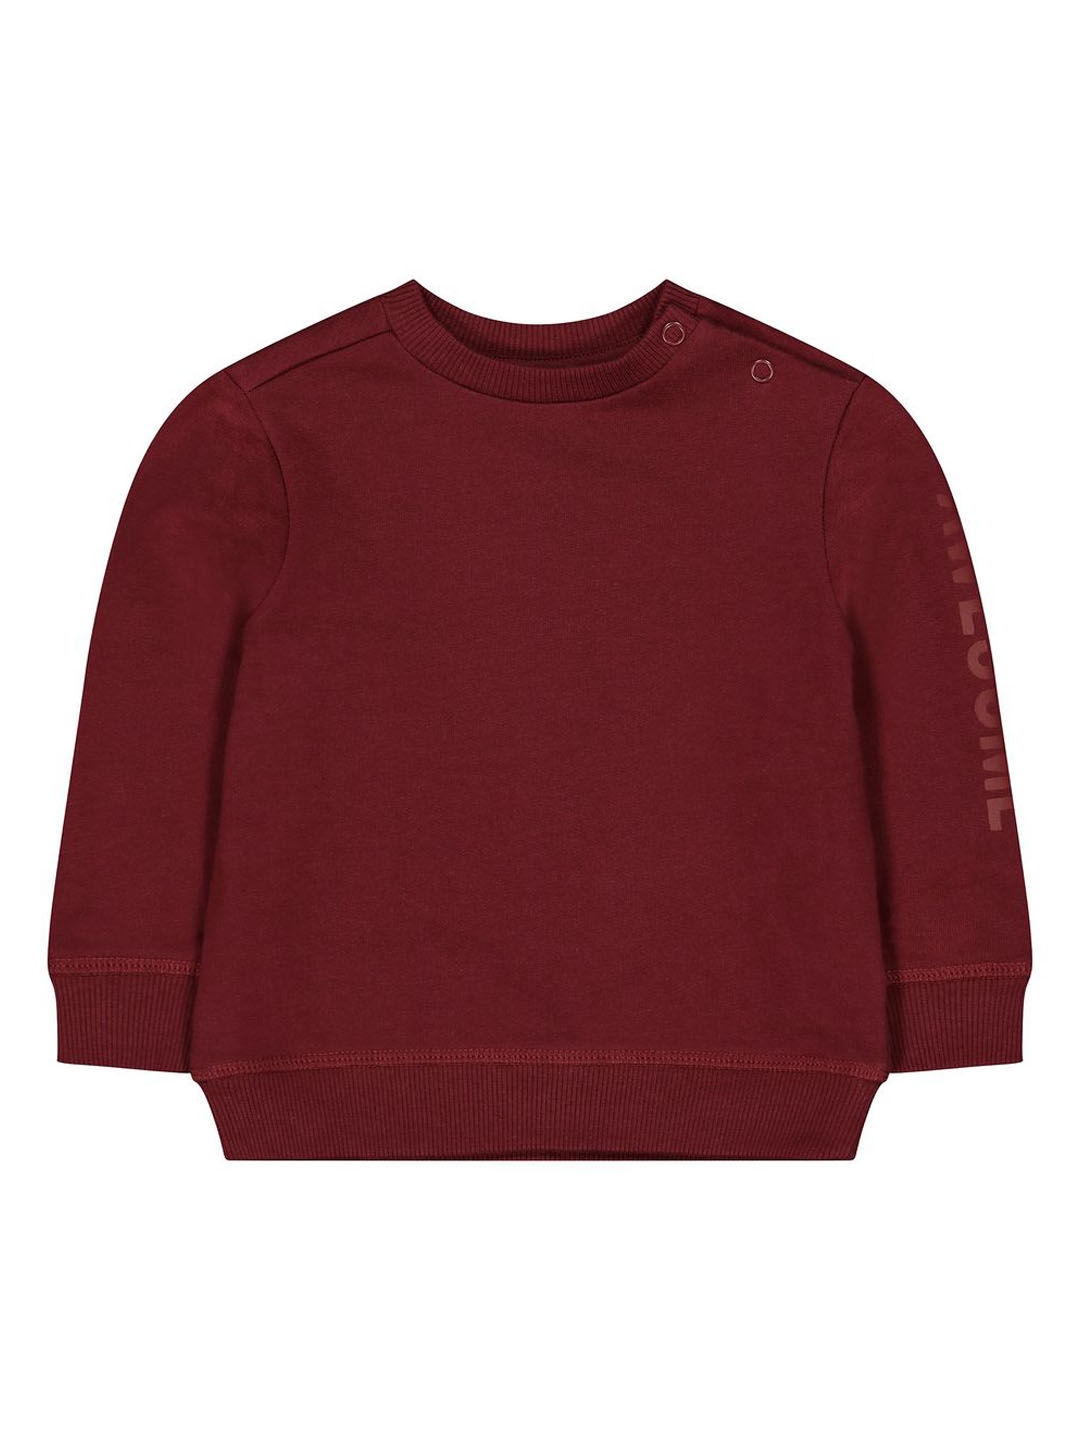 Mothercare | Maroon Solid Sweatshirt 0